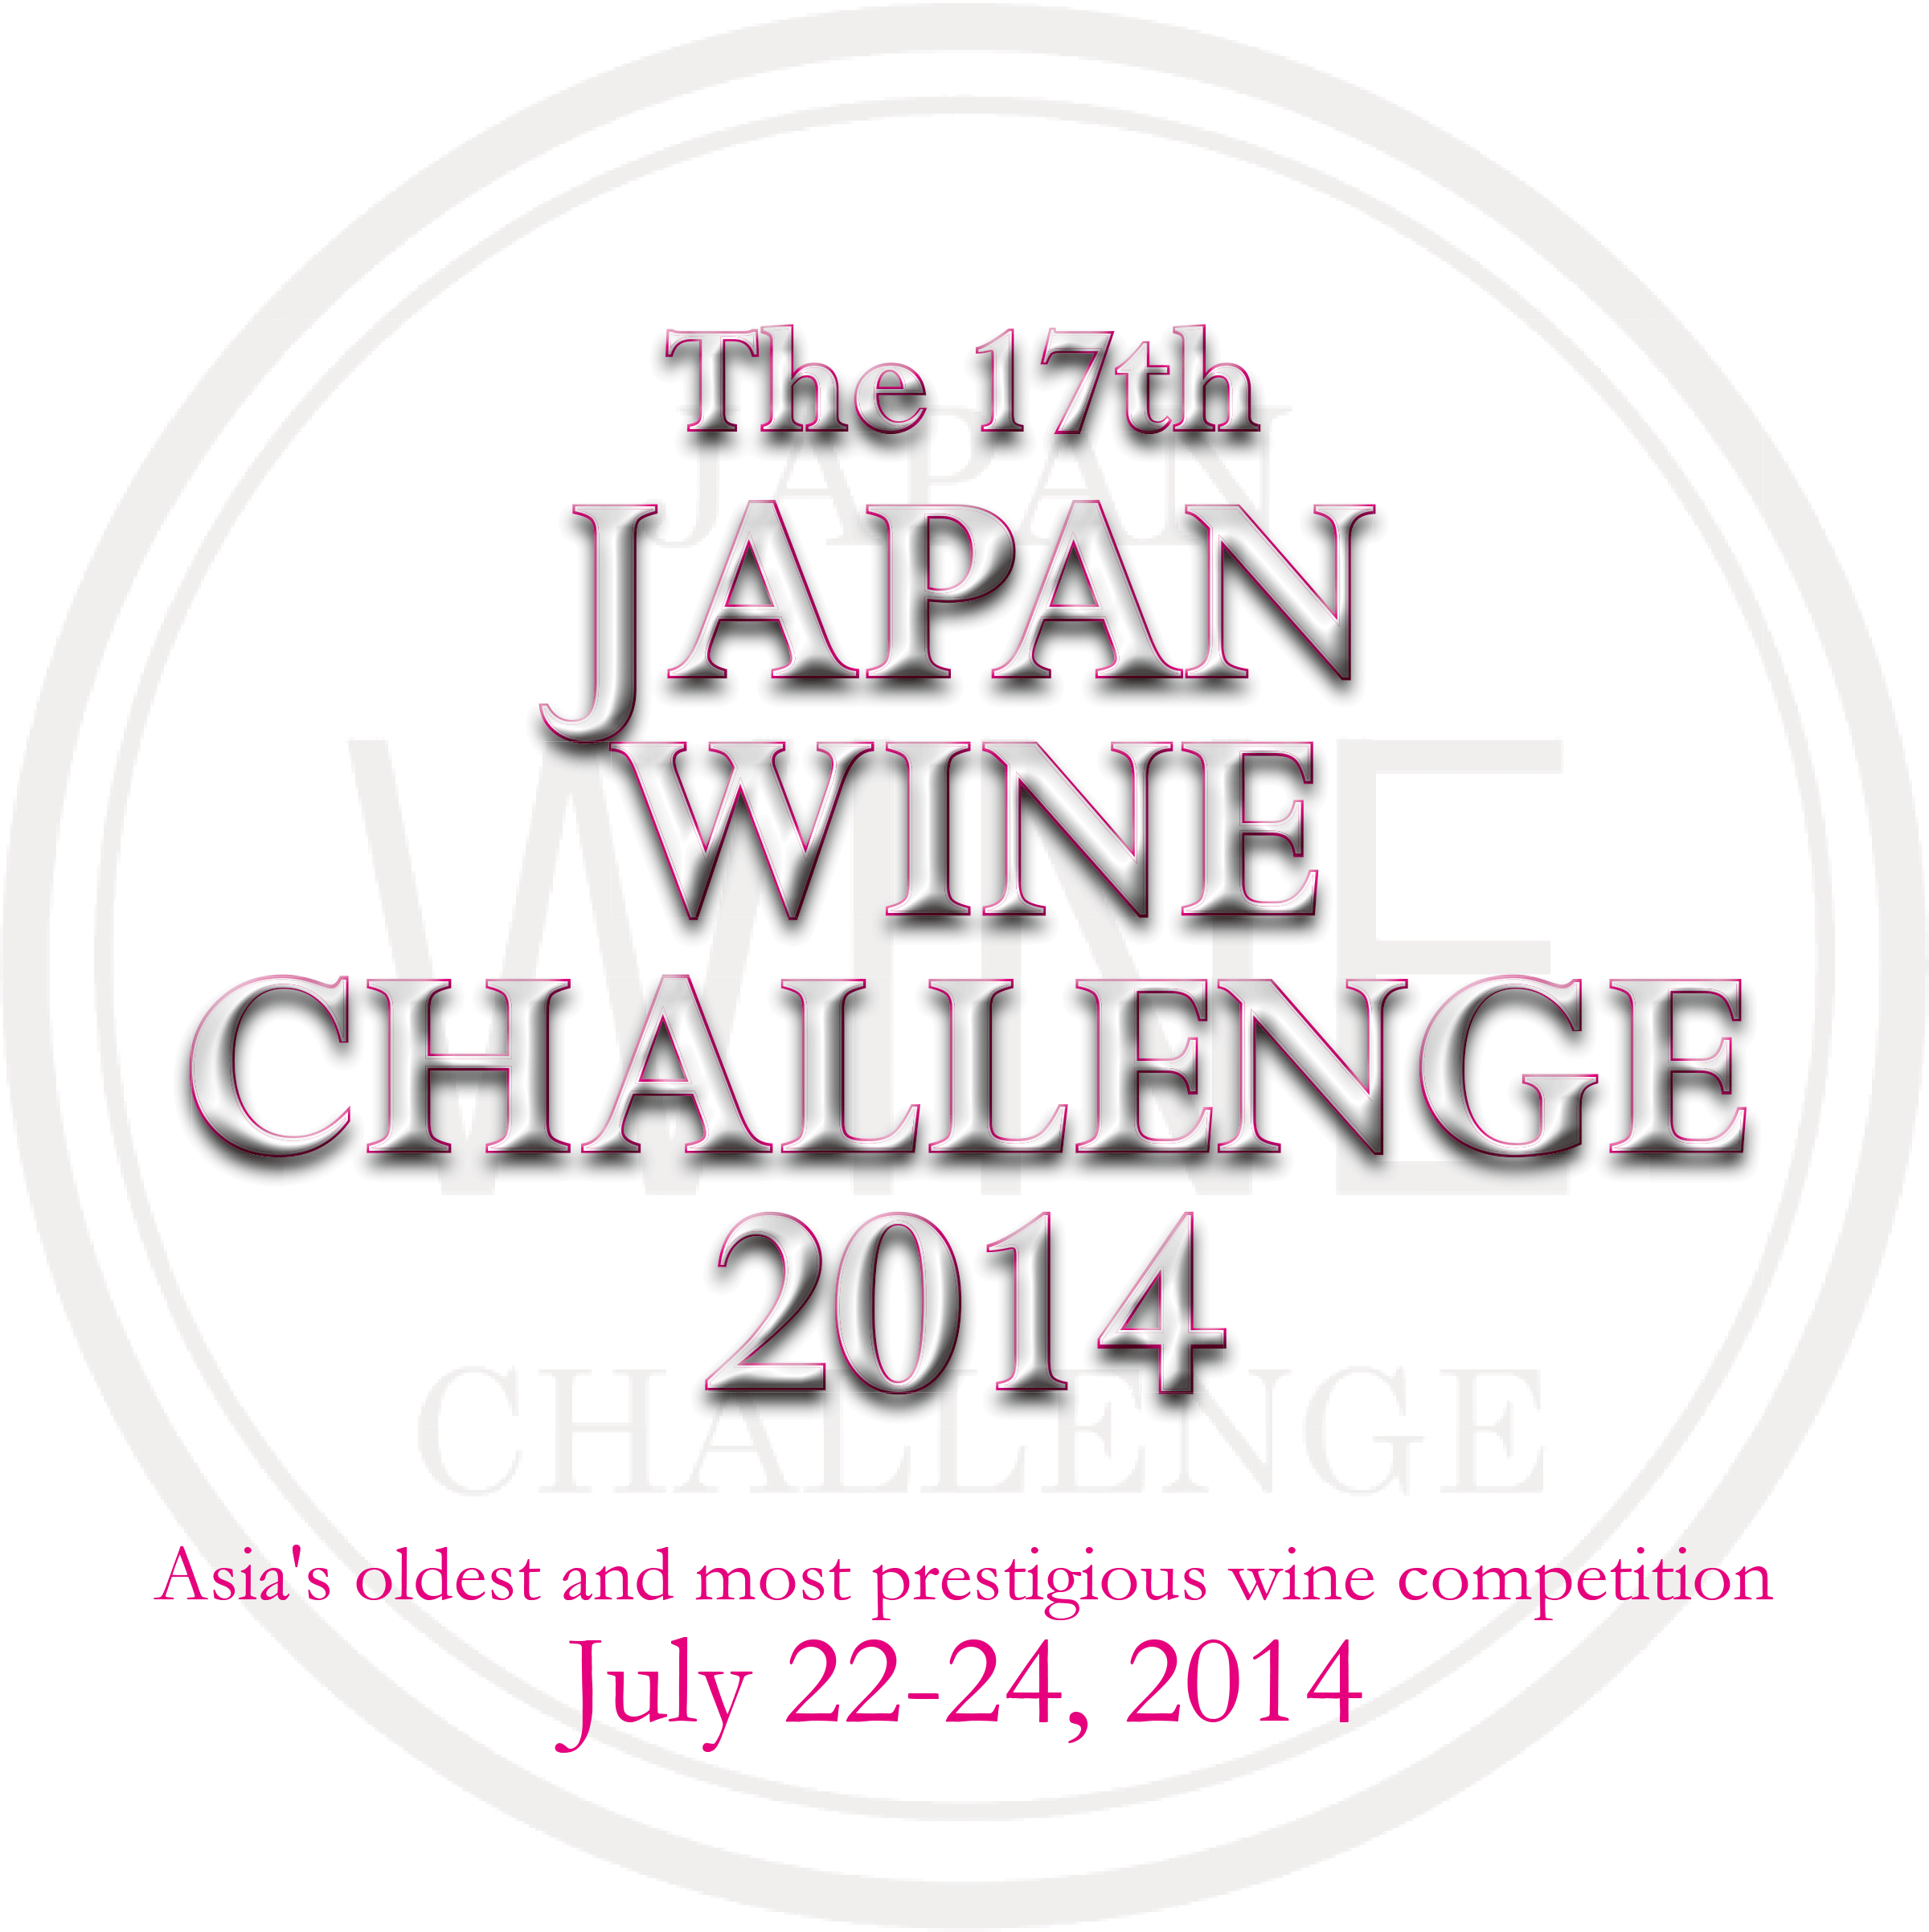 Japan Wine Challenge